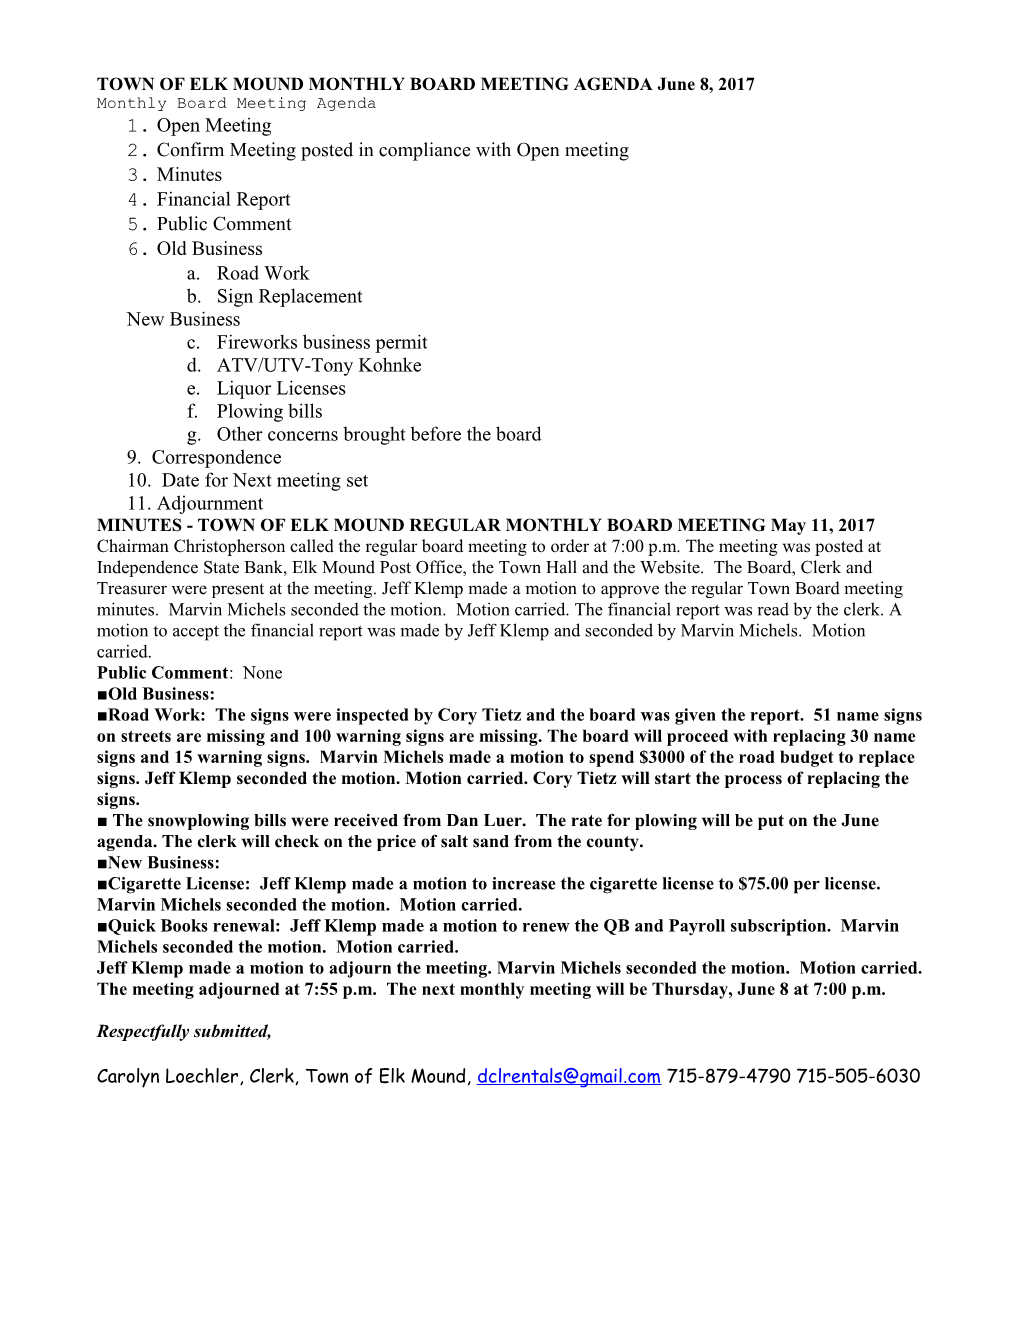 Town of Elk Mound Monthly Board Meeting Agenda